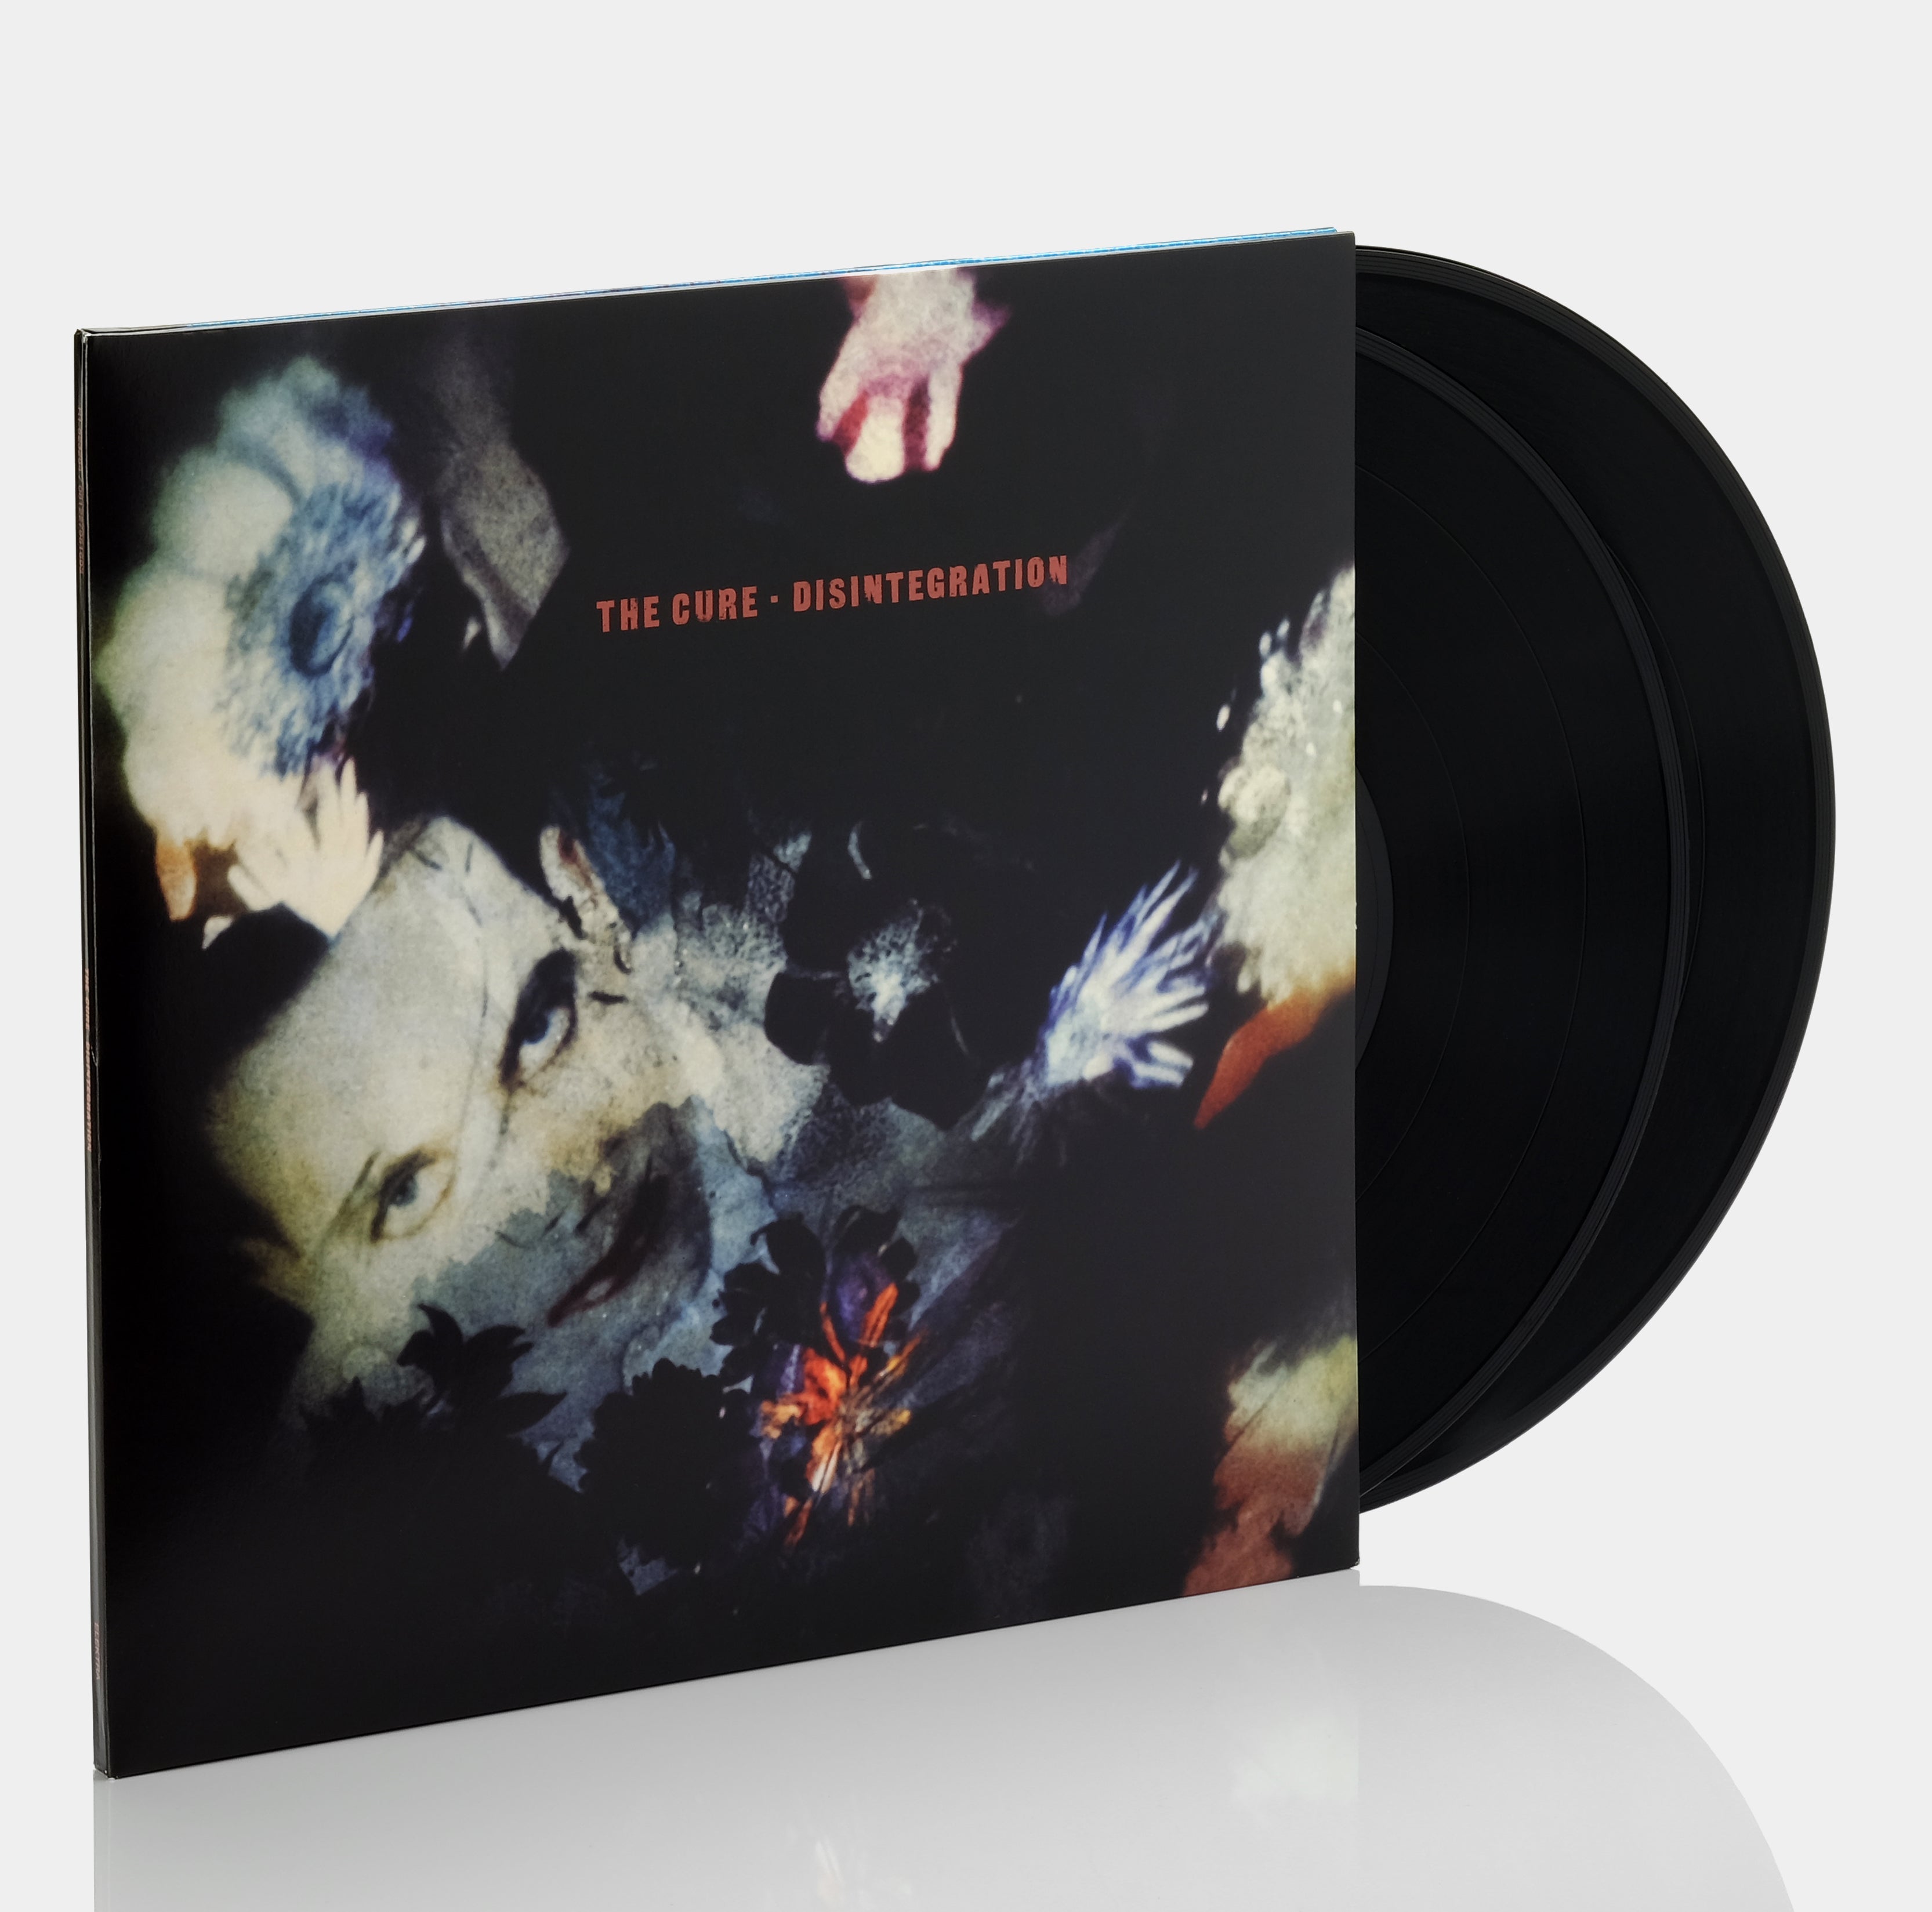 The Cure - Disintegration 2xLP Vinyl Record